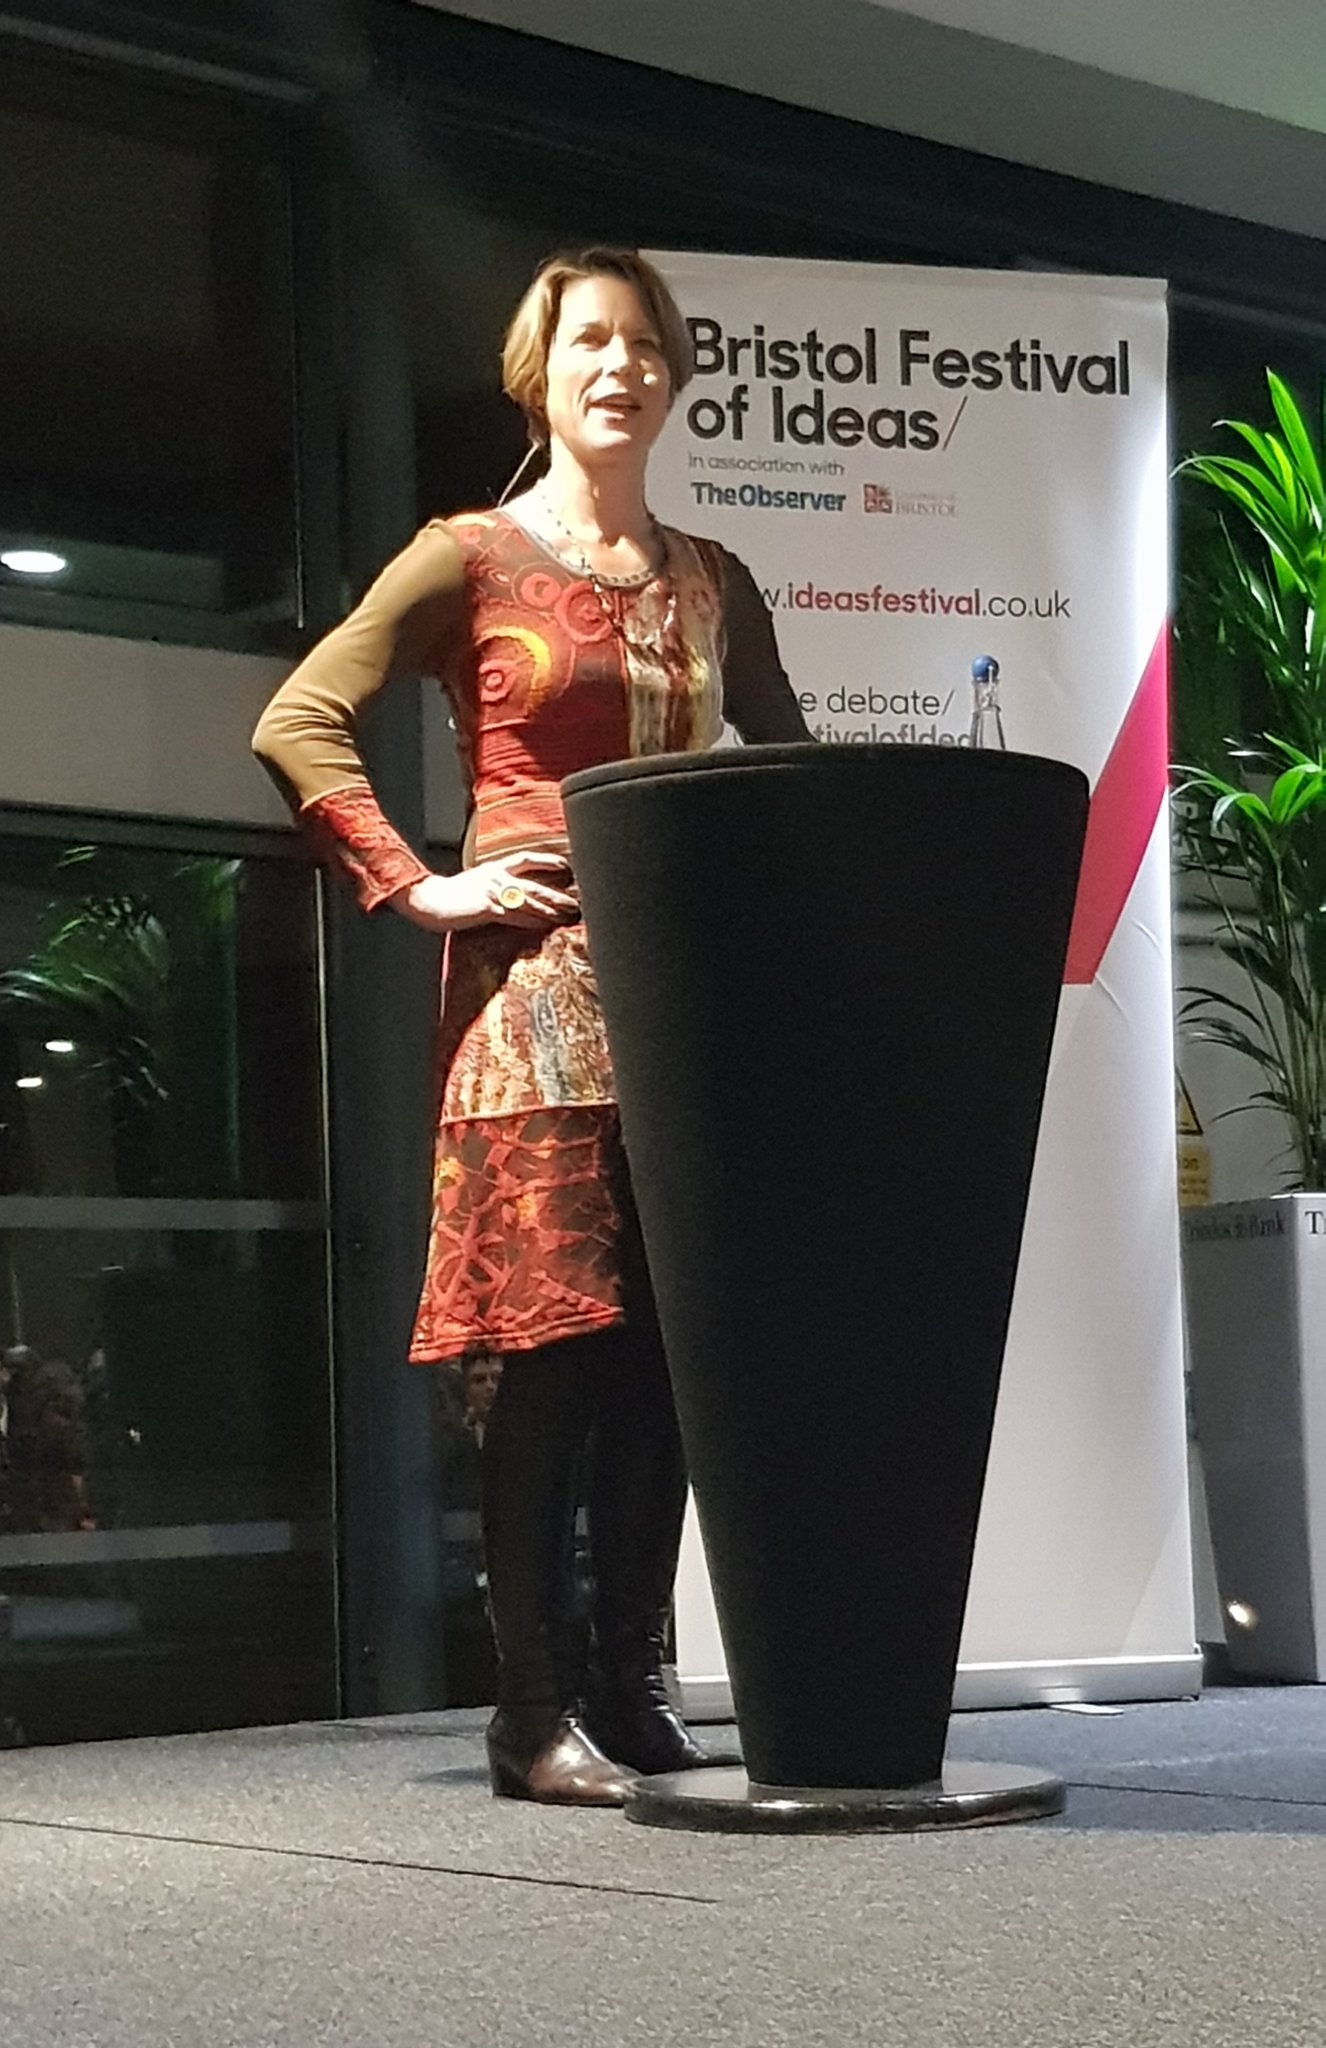 @FestivalofIdeas @MyStephanomics Interesting talk tonight by Stephanie, past, present and future of UK economies with plenty of ideas. https://t.co/xSOEbstjED